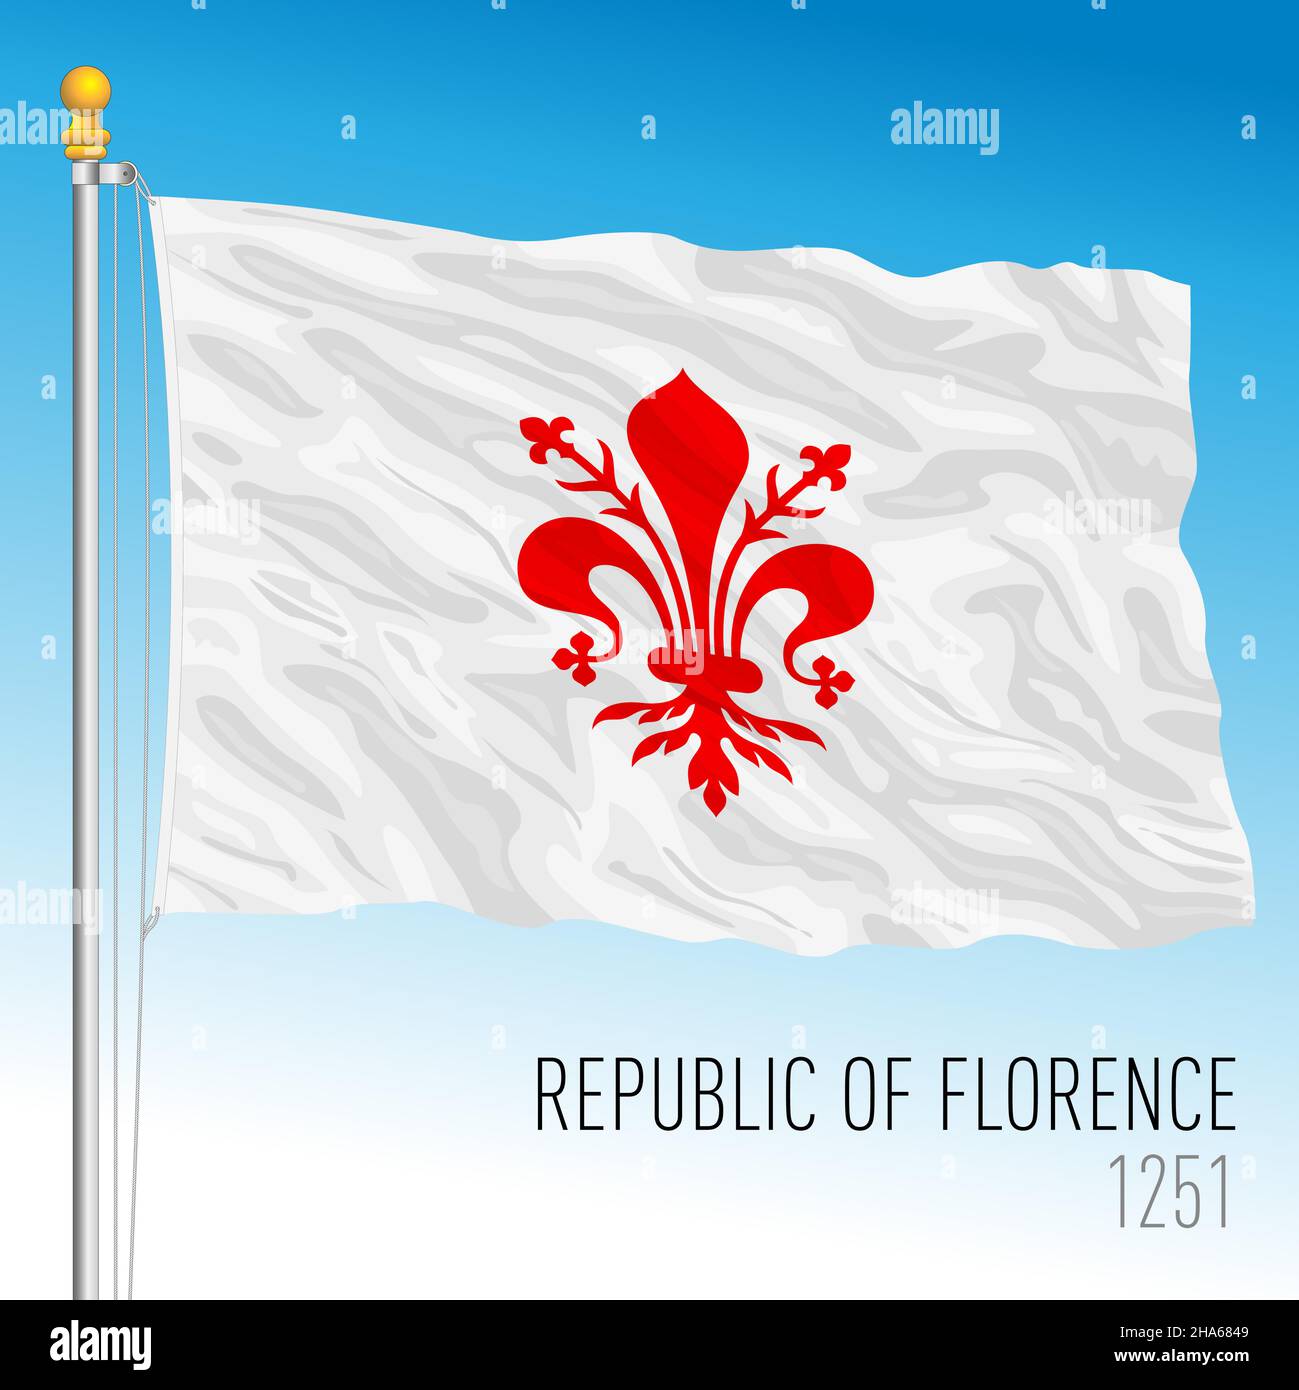 Republic of Florence historical civil flag, 1251, vector illustration Stock Vector